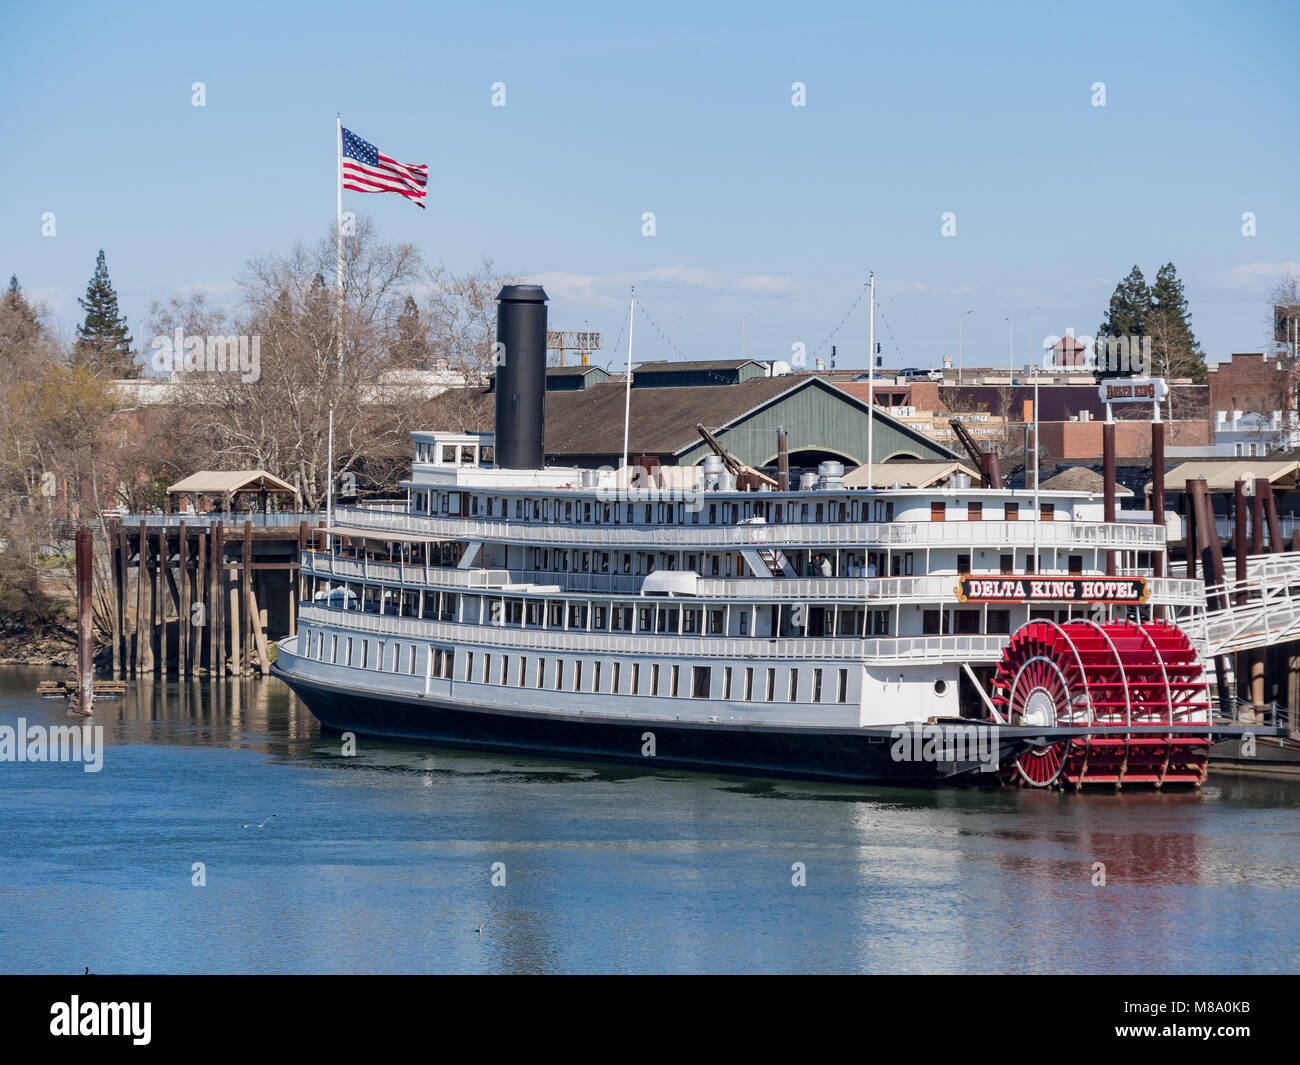 Sacramento, FEB 22: Nachmittag Blick auf den berühmten Delta König mit Sacramento River am 22.Februar, 2018 in Sacramento, Kalifornien Stockfoto